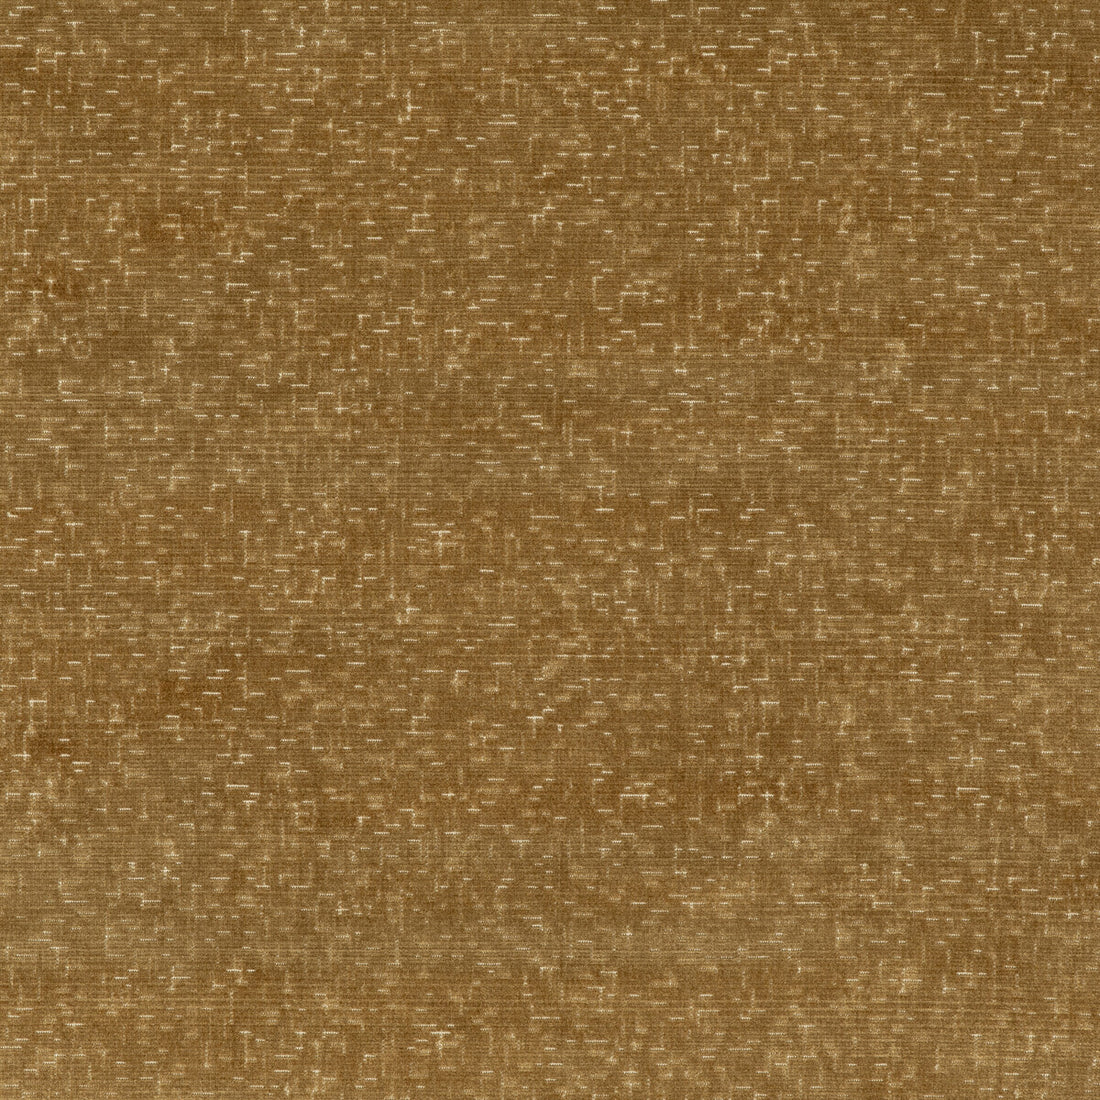 Alma Velvet fabric in bronze color - pattern BF10827.850.0 - by G P &amp; J Baker in the Coromandel Velvets collection